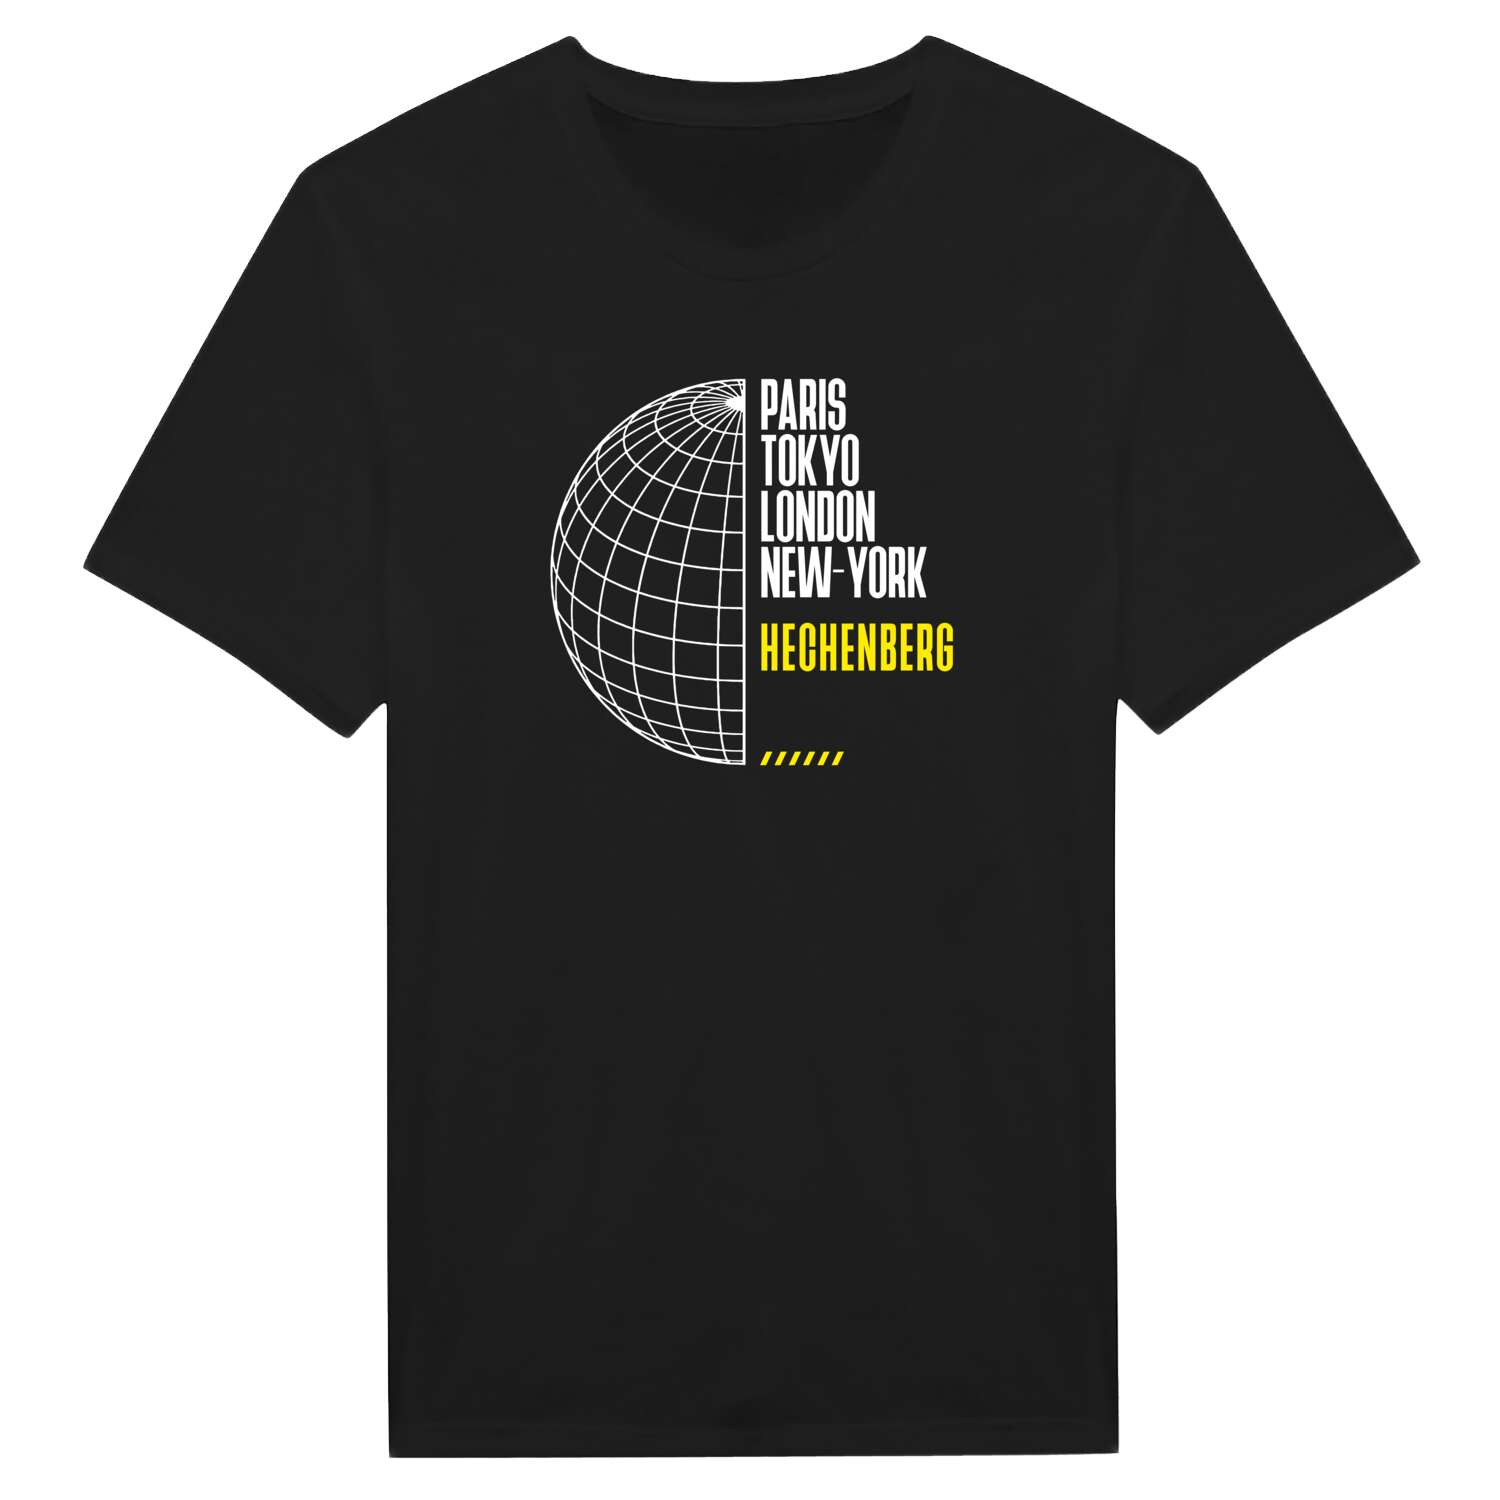 Hechenberg T-Shirt »Paris Tokyo London«